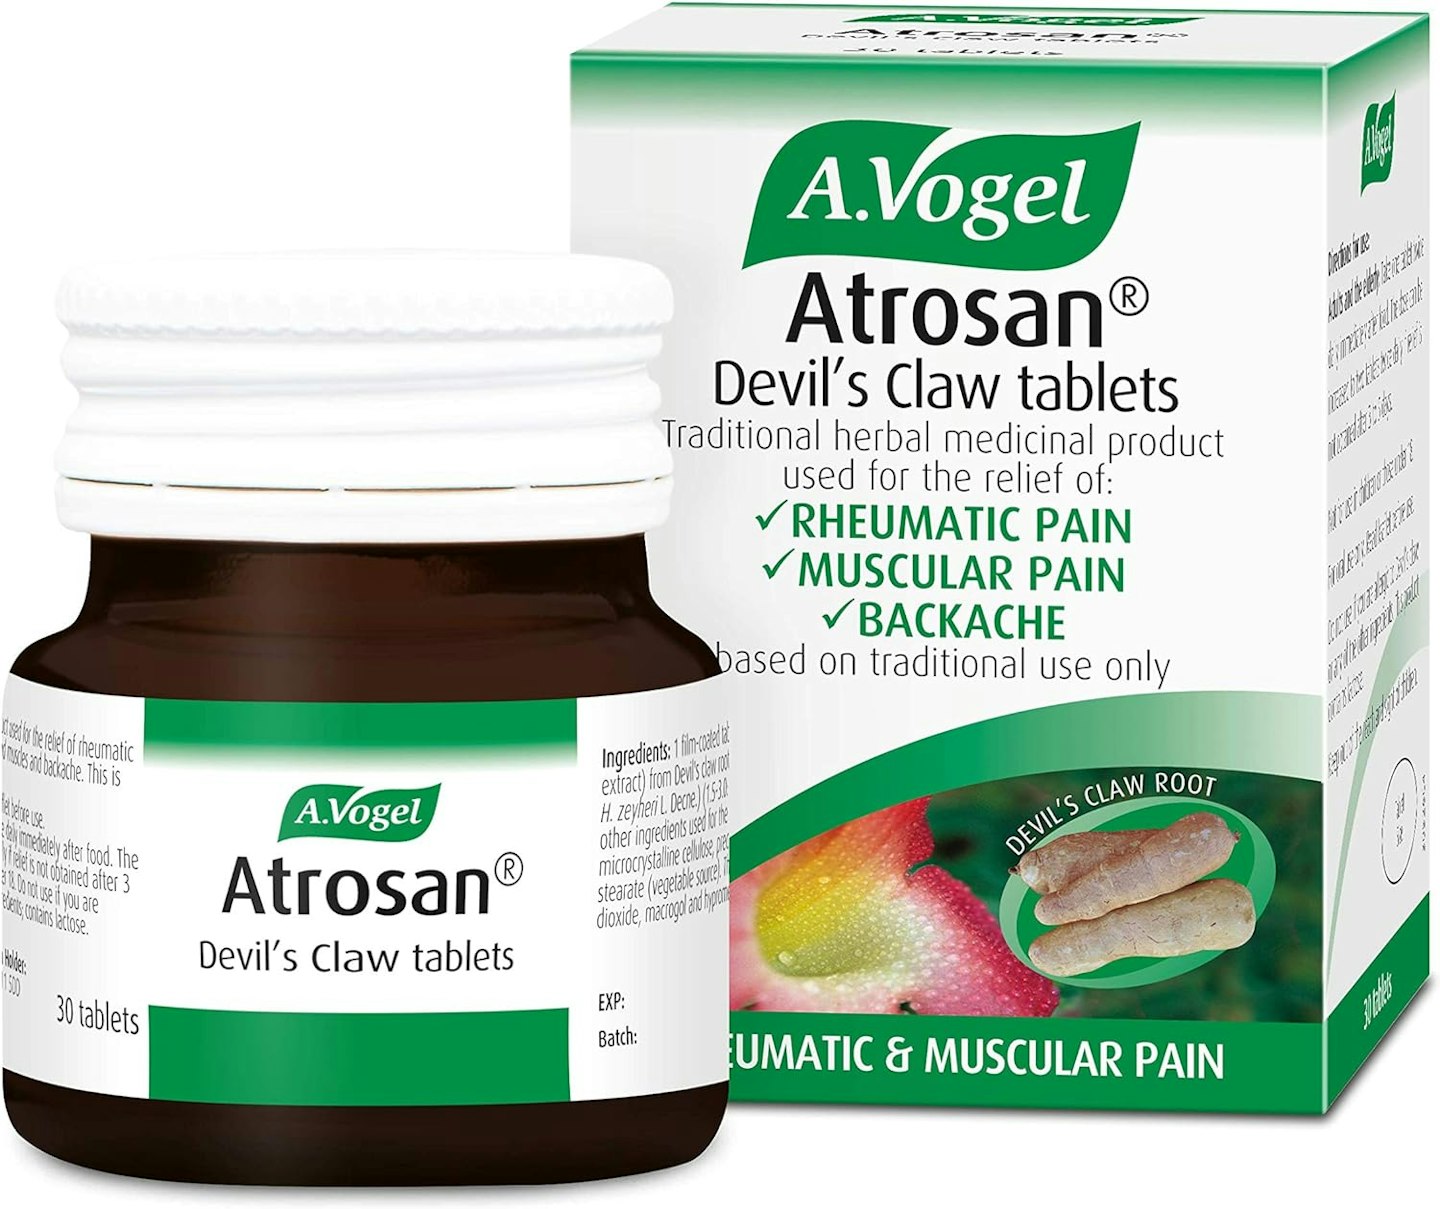 A.Vogel Atrosan Devil’s Claw Tablets